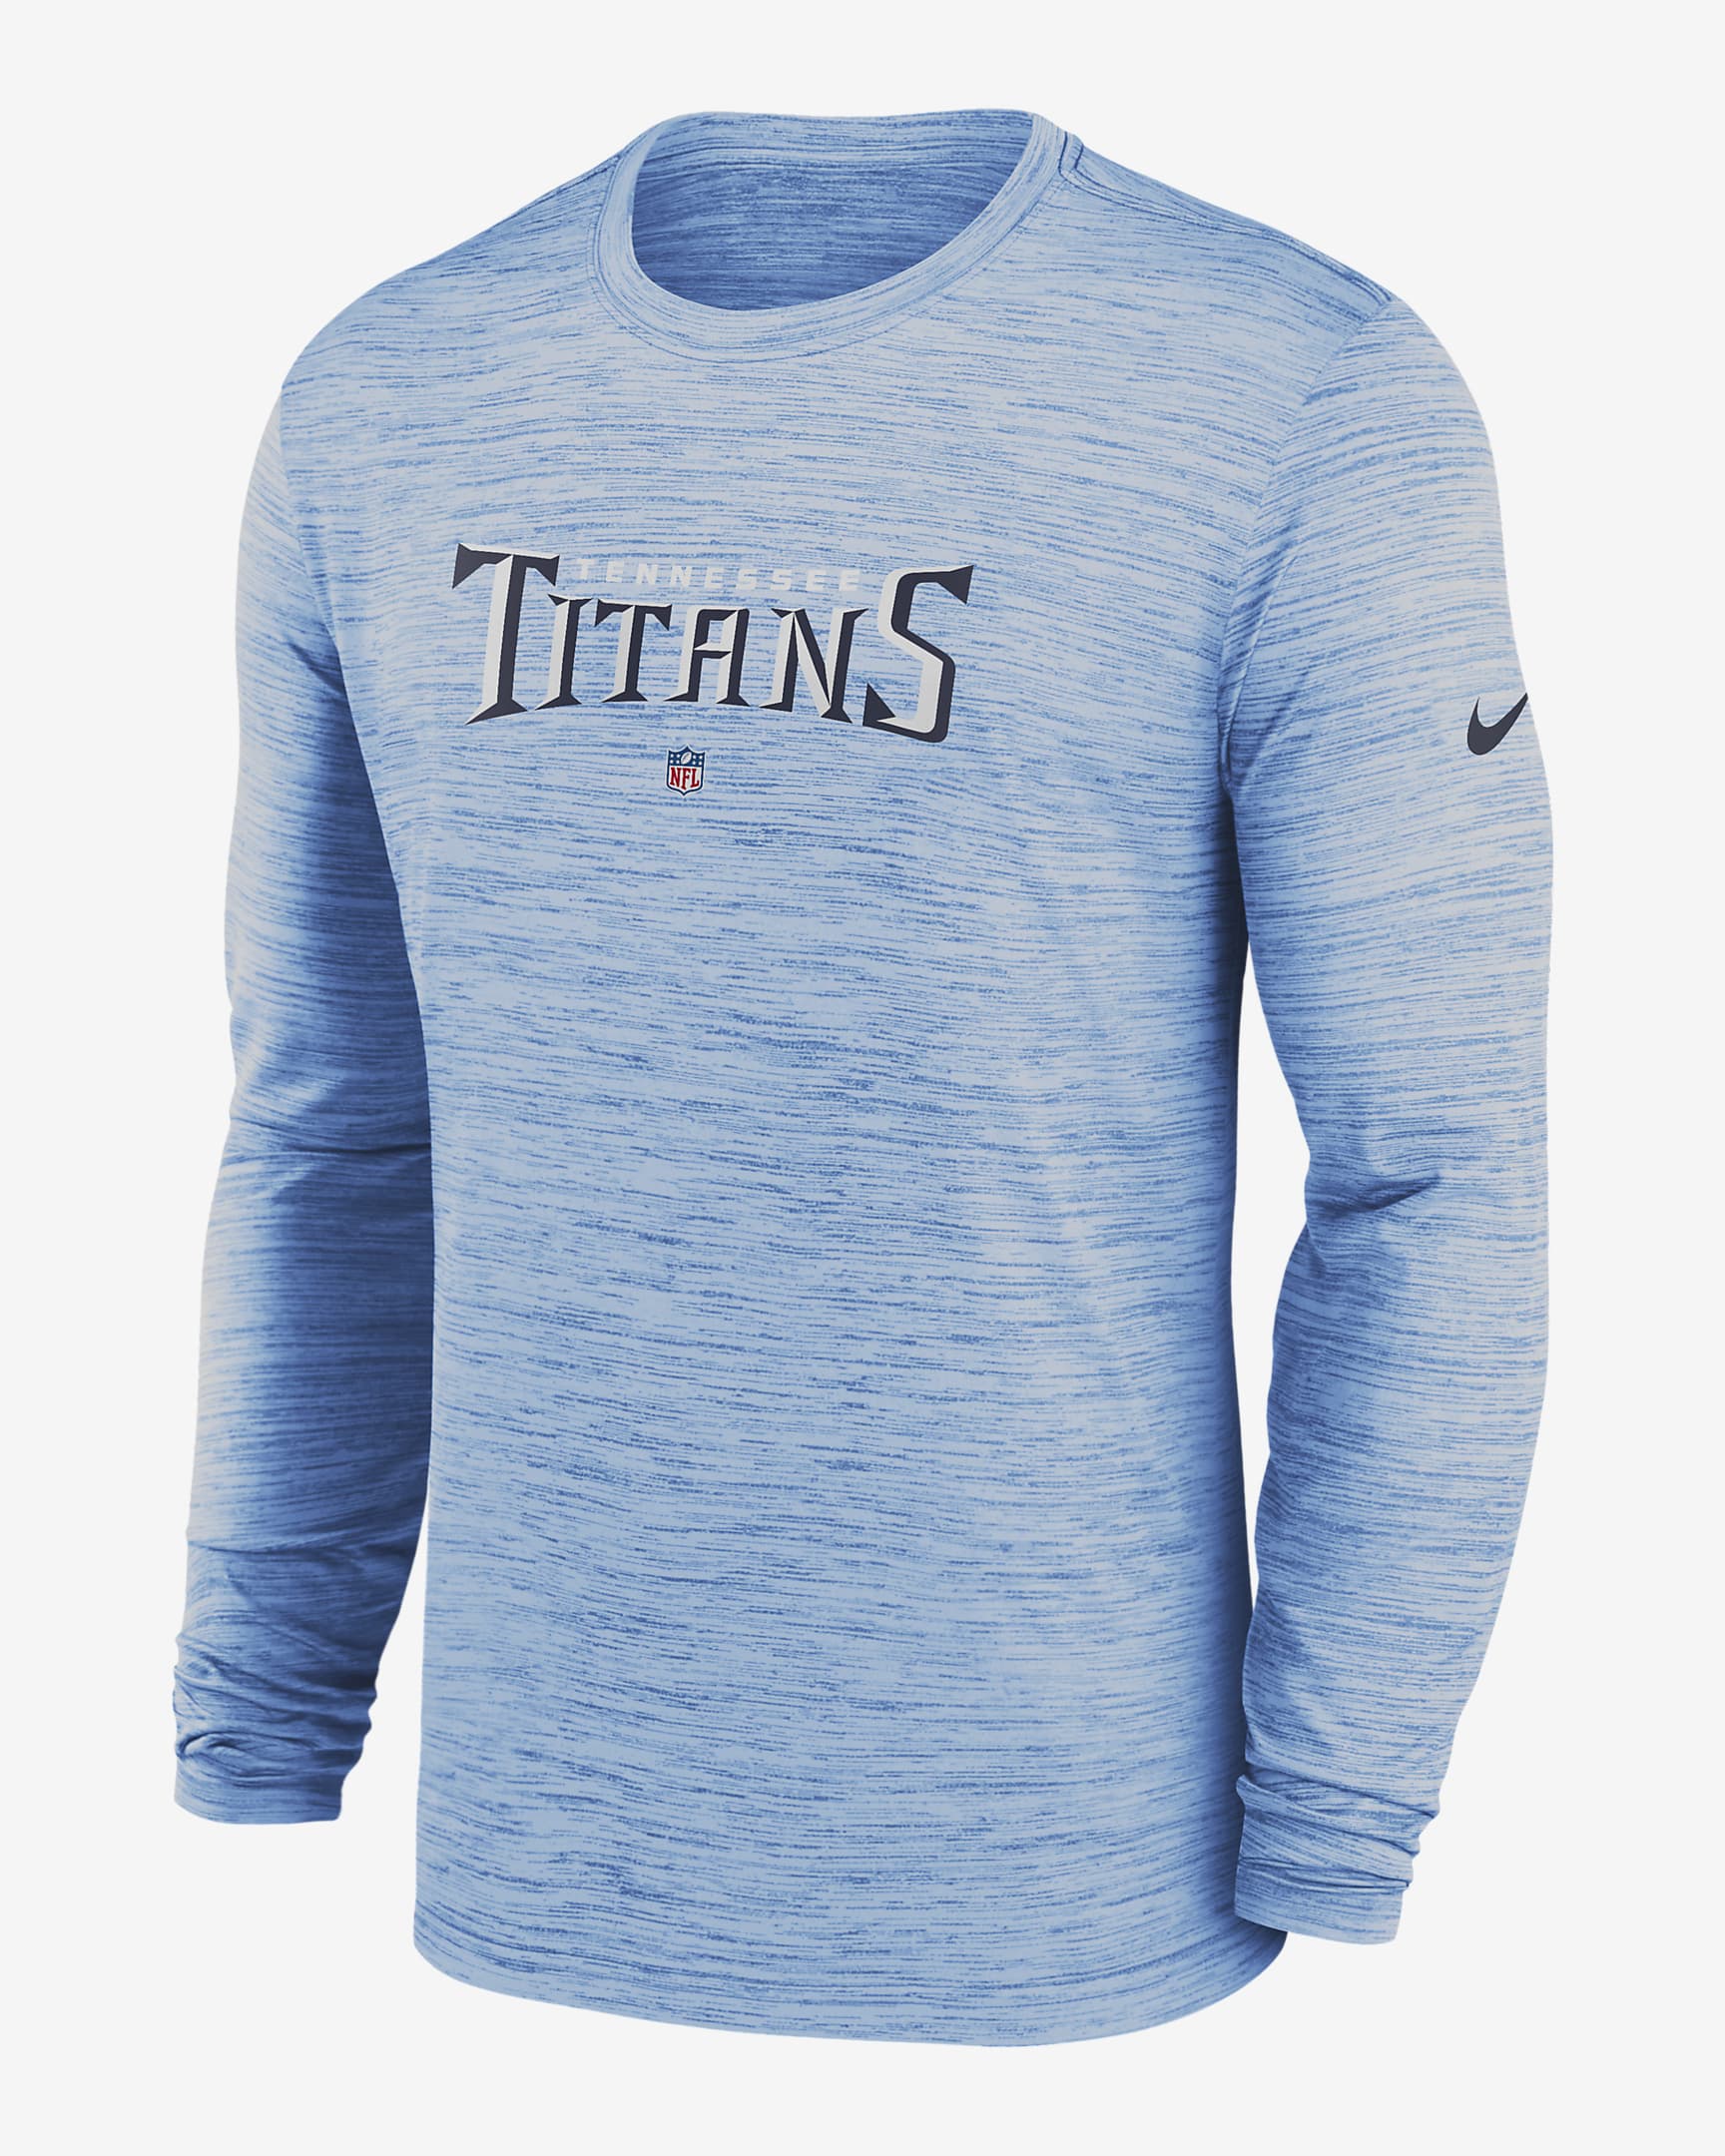 Nike Dri-FIT Sideline Velocity (NFL Tennessee Titans) Men's Long-Sleeve ...